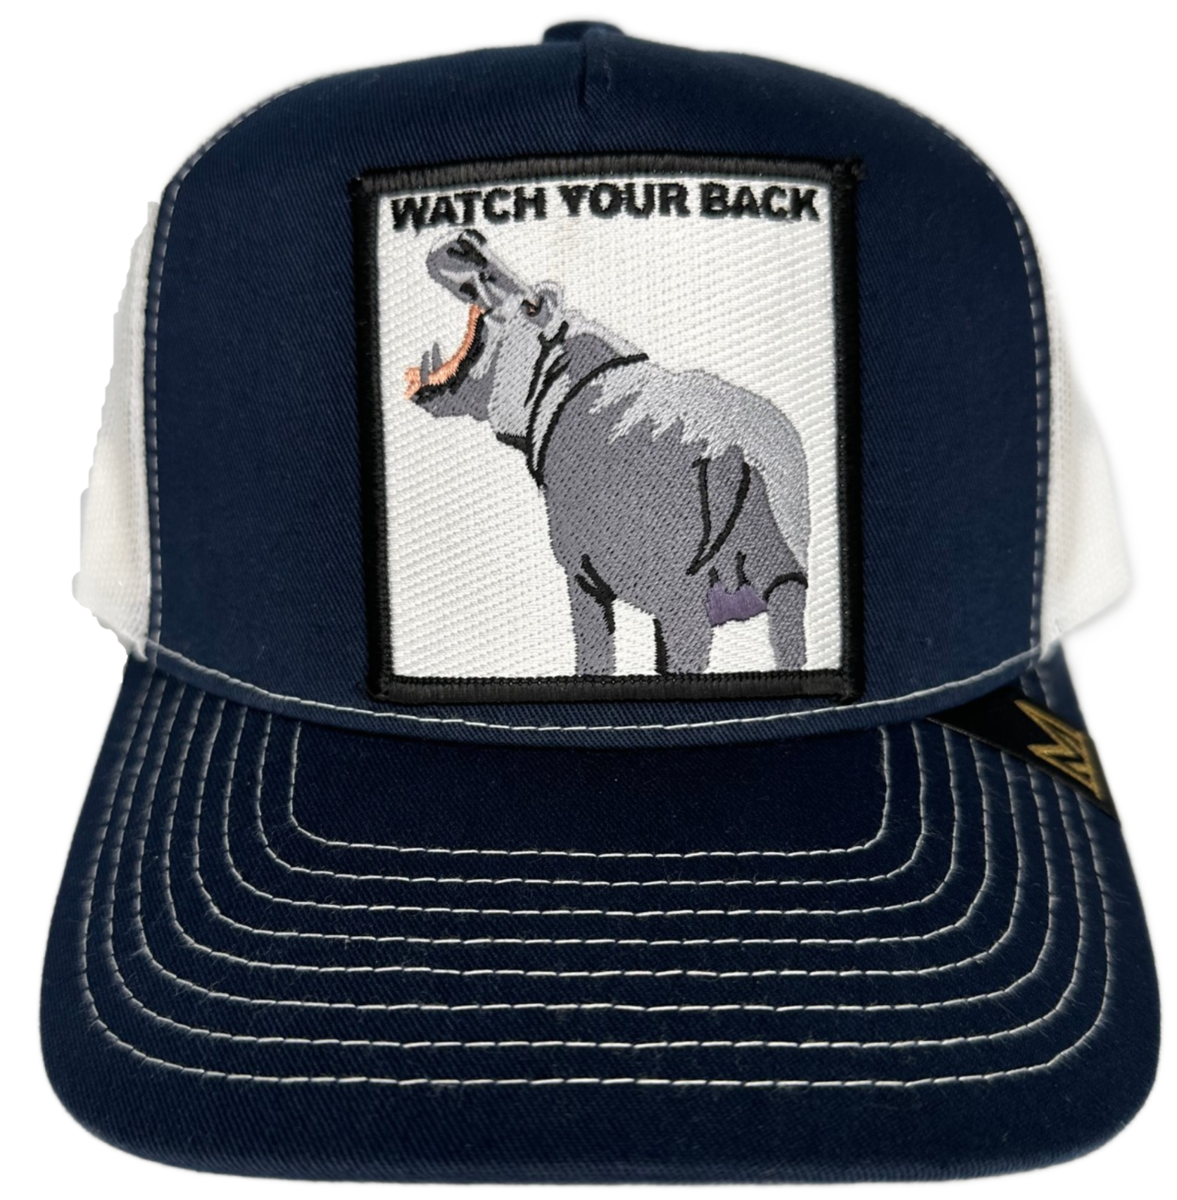 MV Dad Hats - Watch Your Back Trucker Hat - Black/White